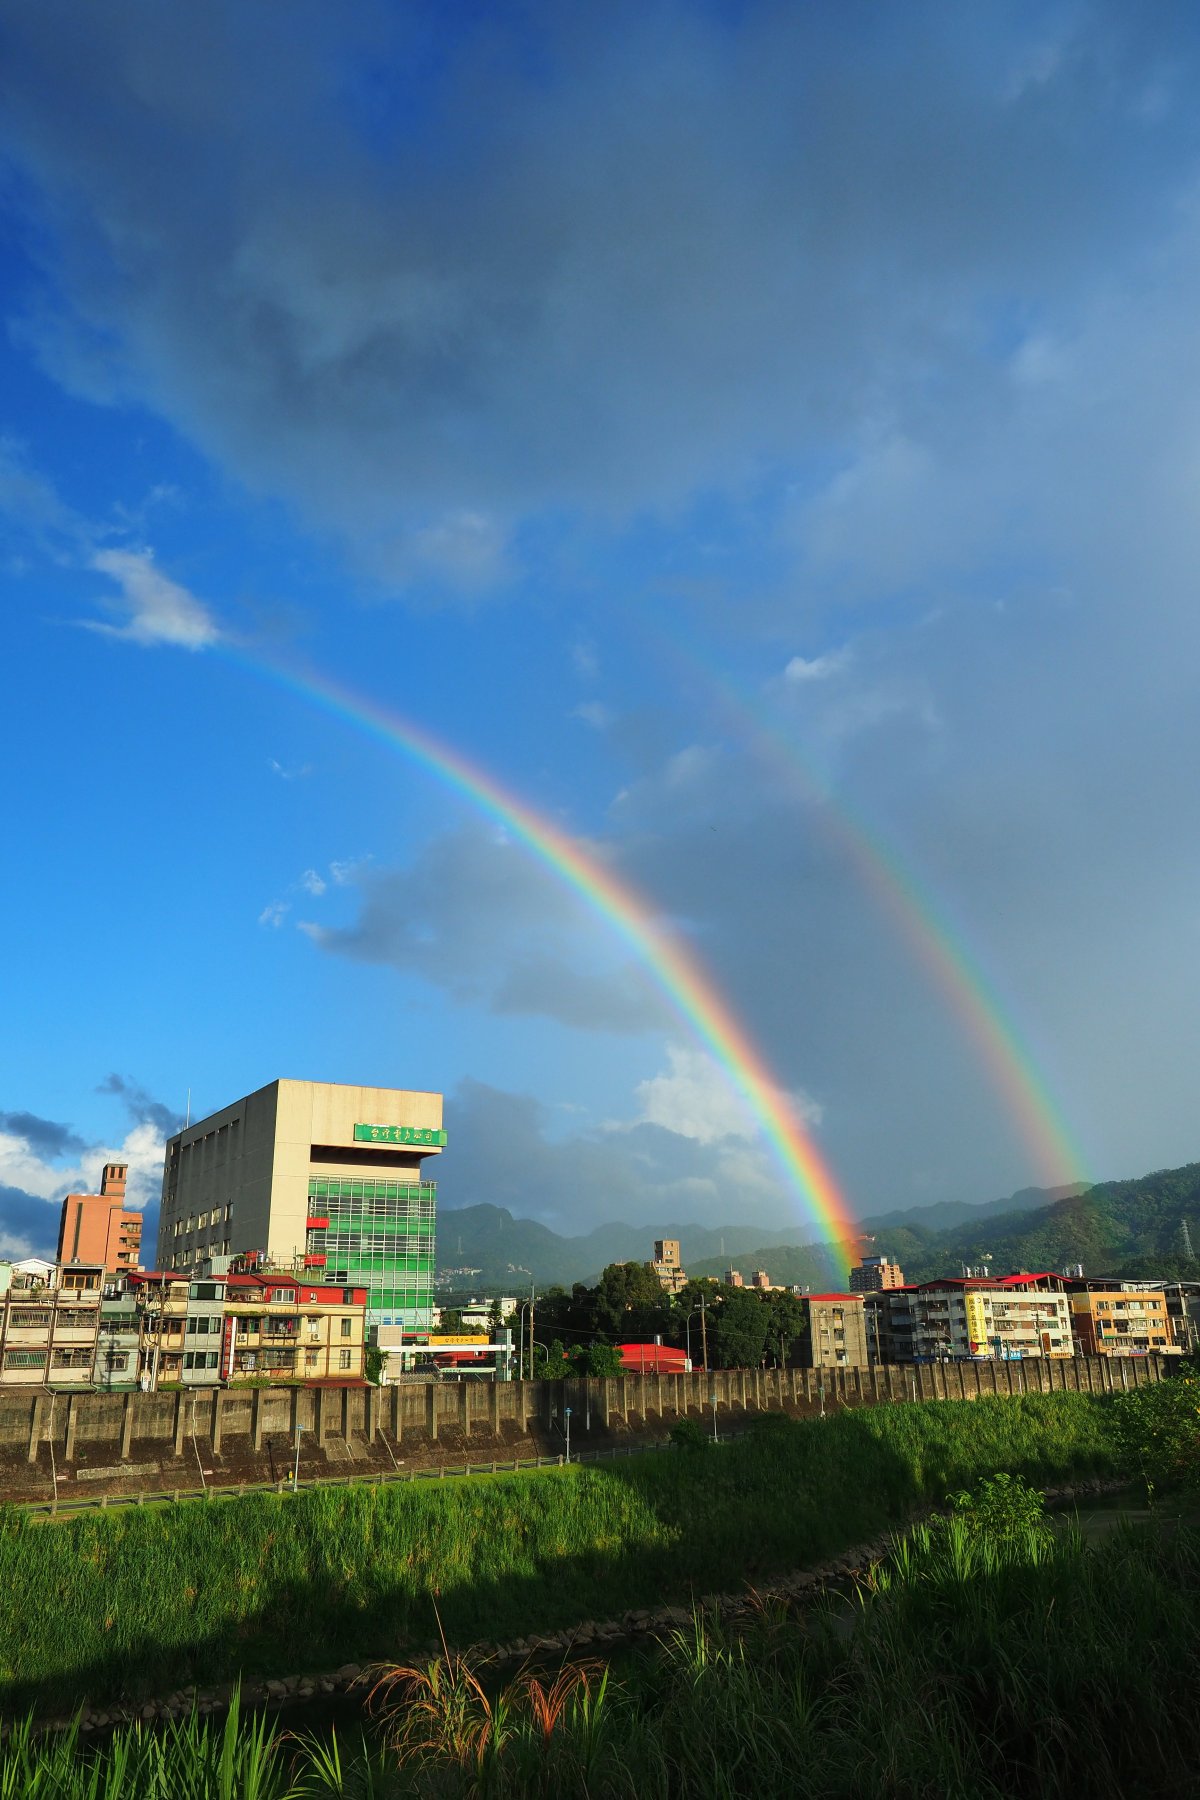 Real photos of rainbow after rain